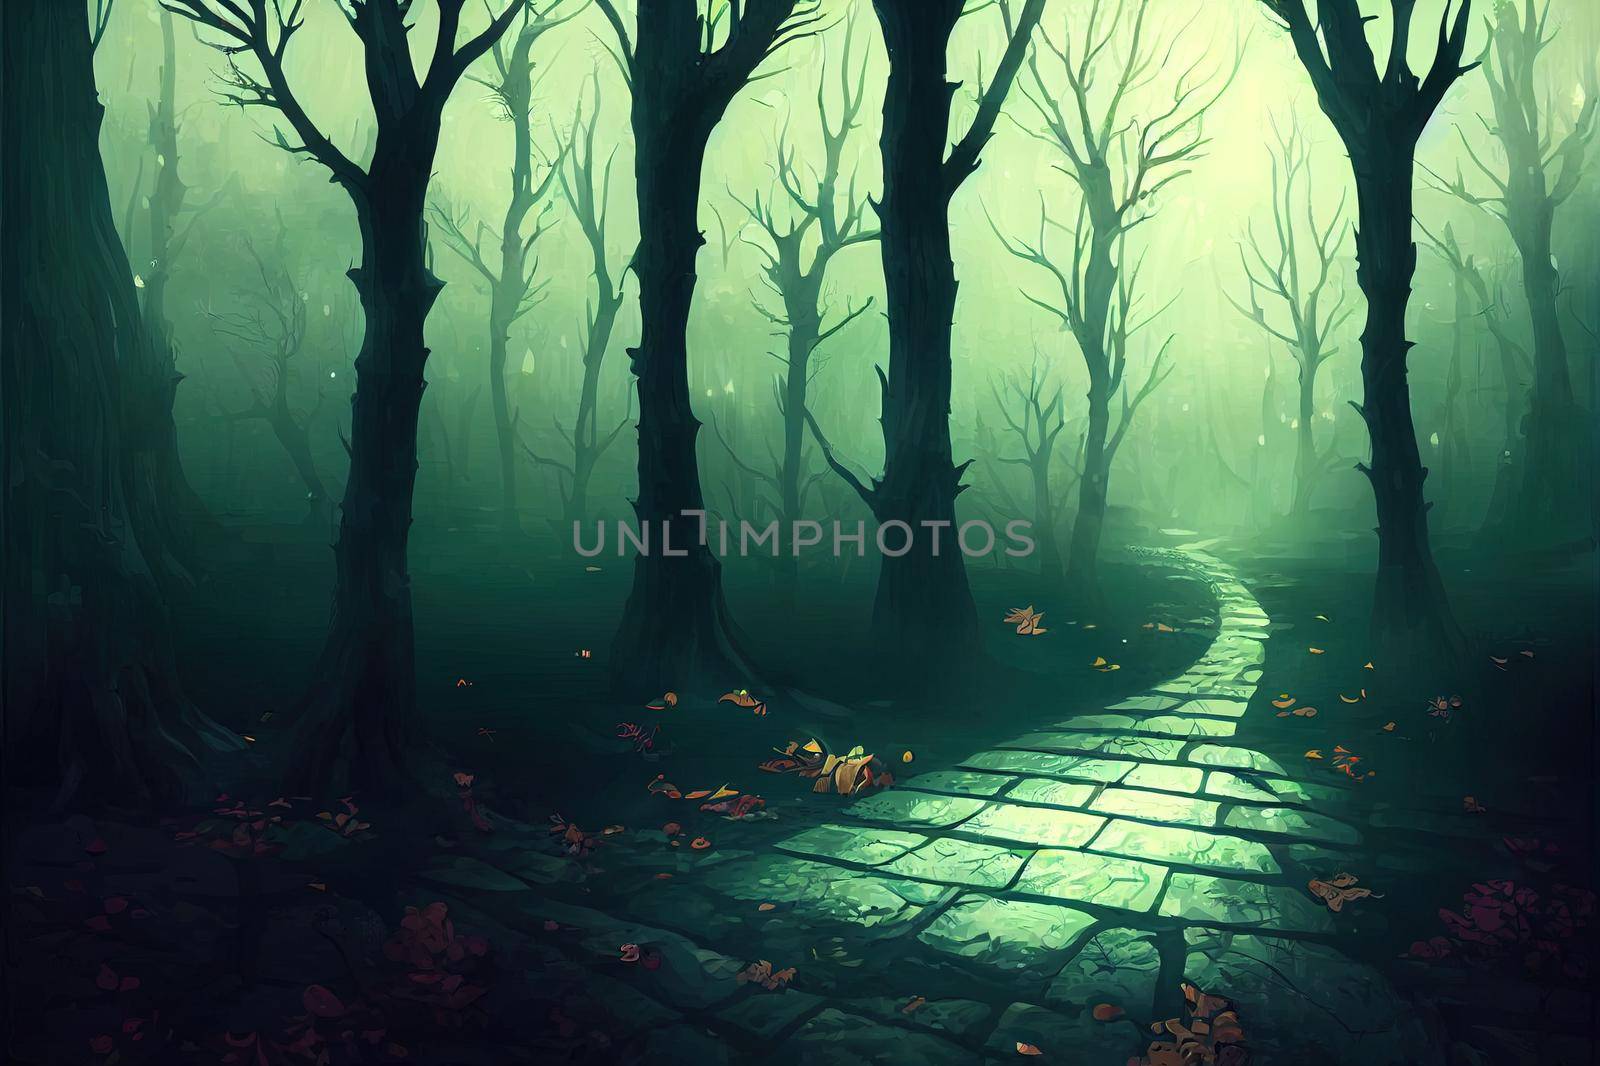 Haunted forest creepy landscape illustration. Fantasy Halloween forest background. Cartoon style. Surreal mysterious atmospheric woods design backdrop. 3D illustration.